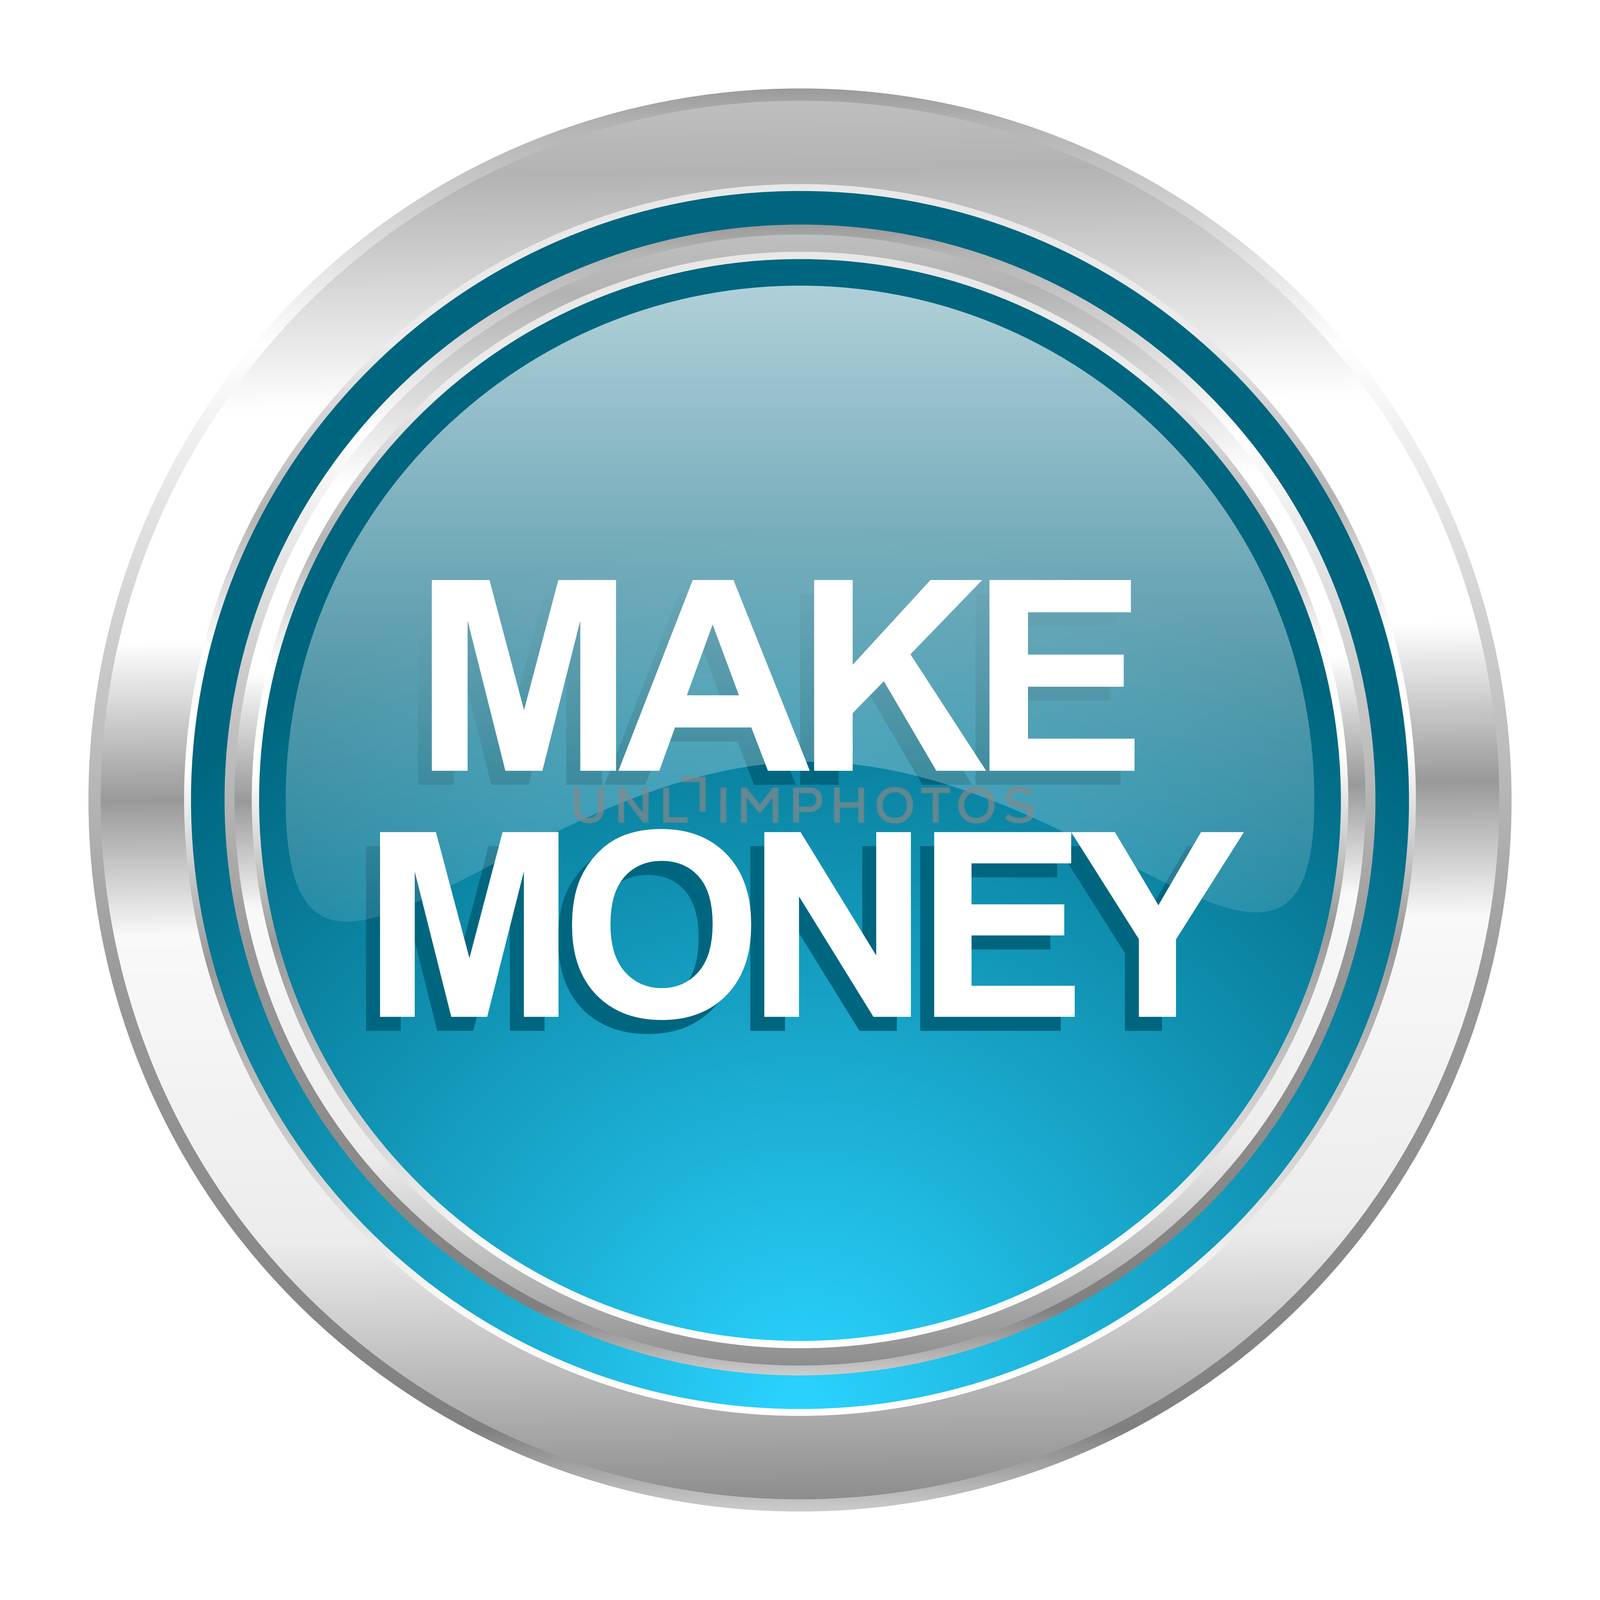 make money icon by alexwhite